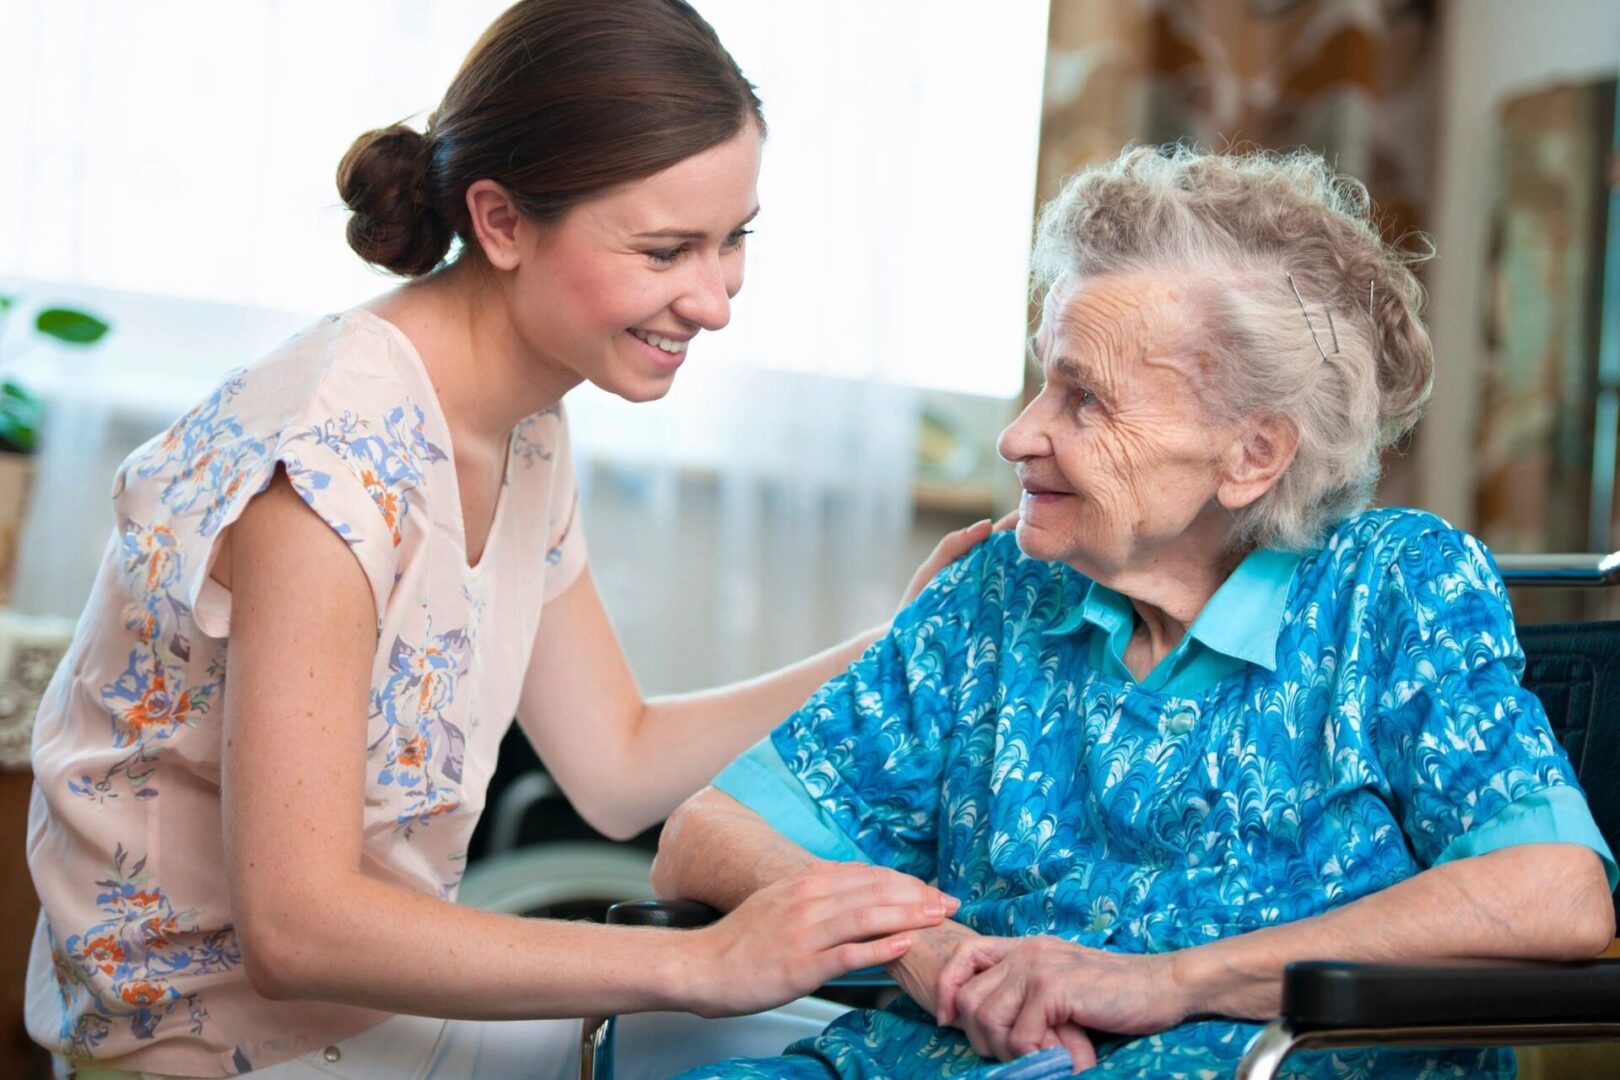 Elderly Woman on Wheelchair With a Nurse